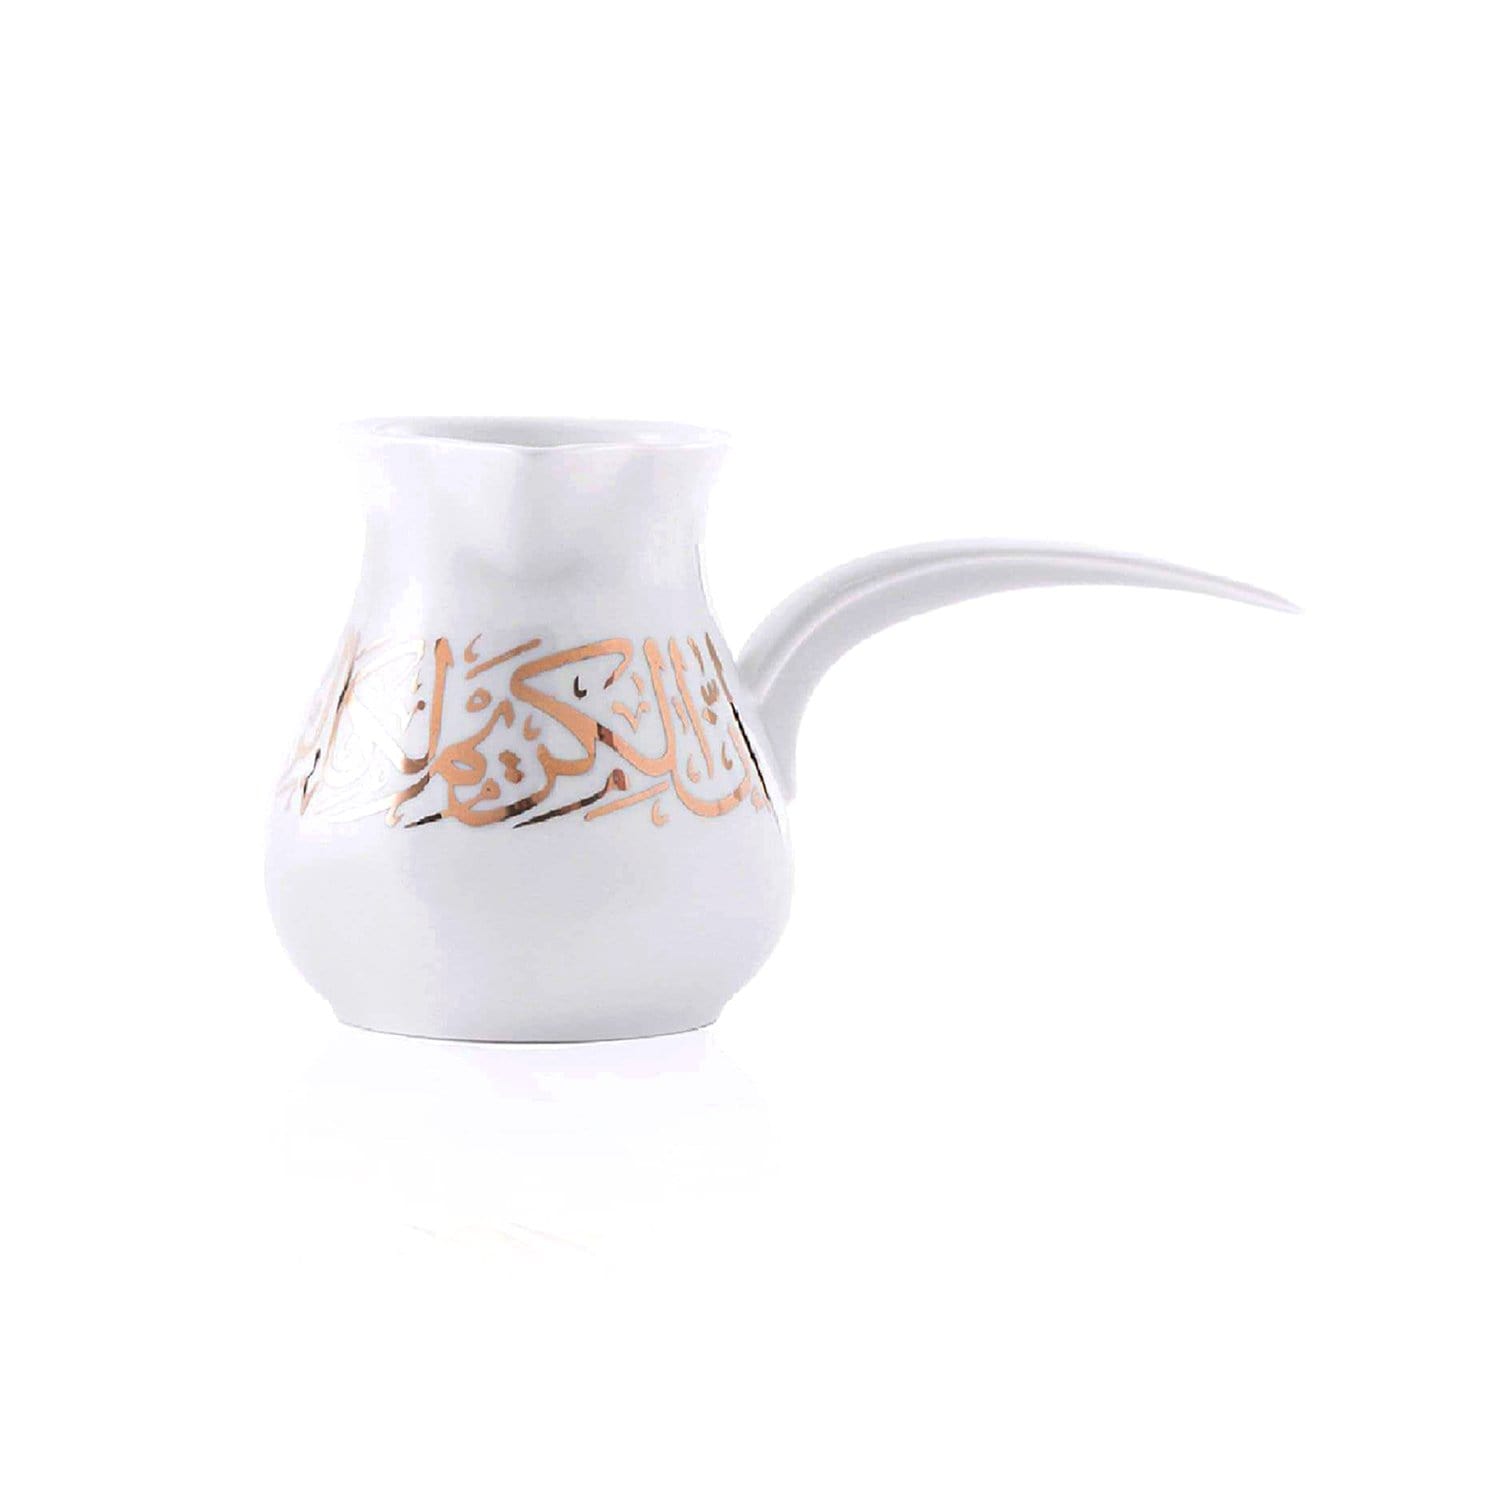 Dimlaj Kareem Turkish Small Coffee Pot - White and Gold - 46669 - Jashanmal Home